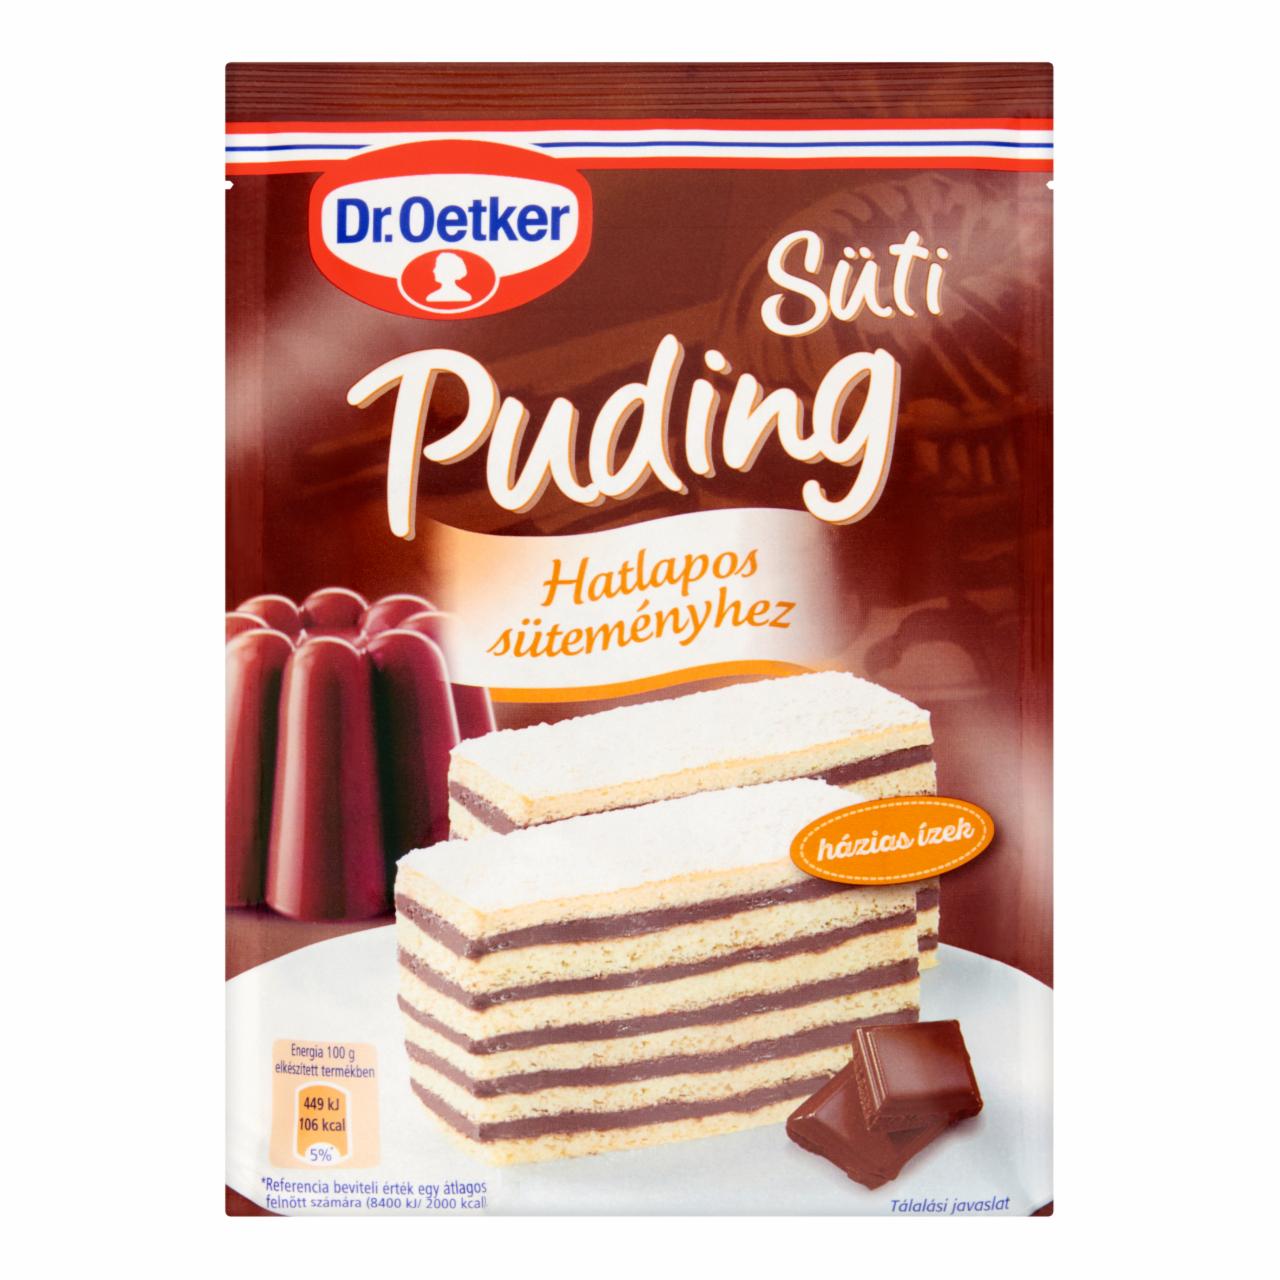 Képek - Dr. Oetker Süti Puding csokoládés pudingpor hatlapos süteményhez 100 g